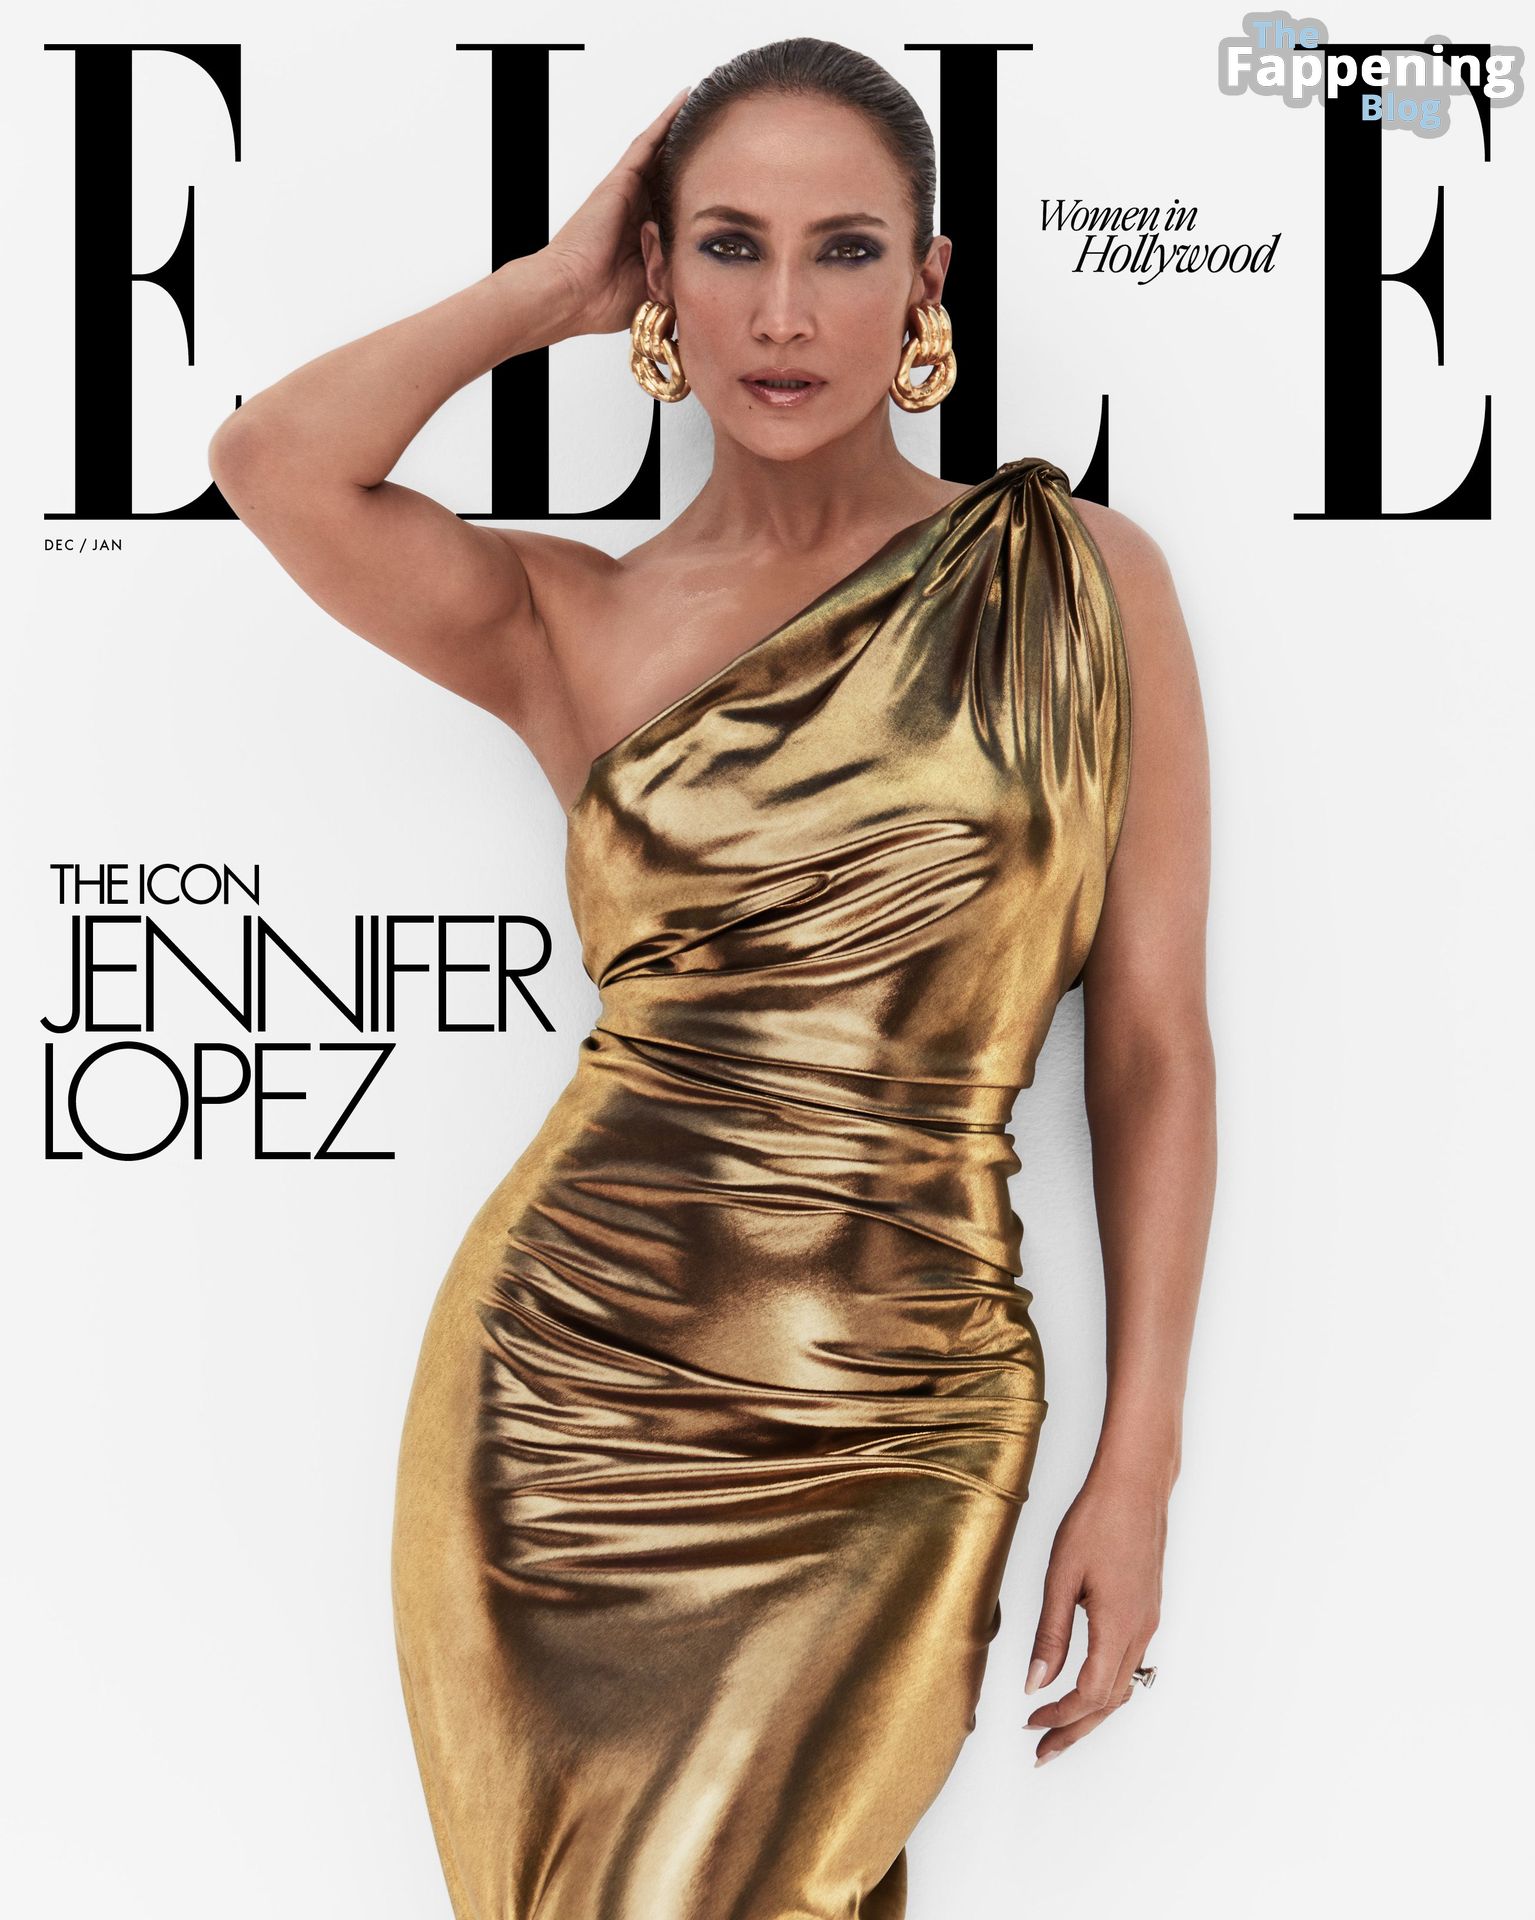 Jennifer-Lopez-Sexy-8-The-Fappening-Blog-1.jpg